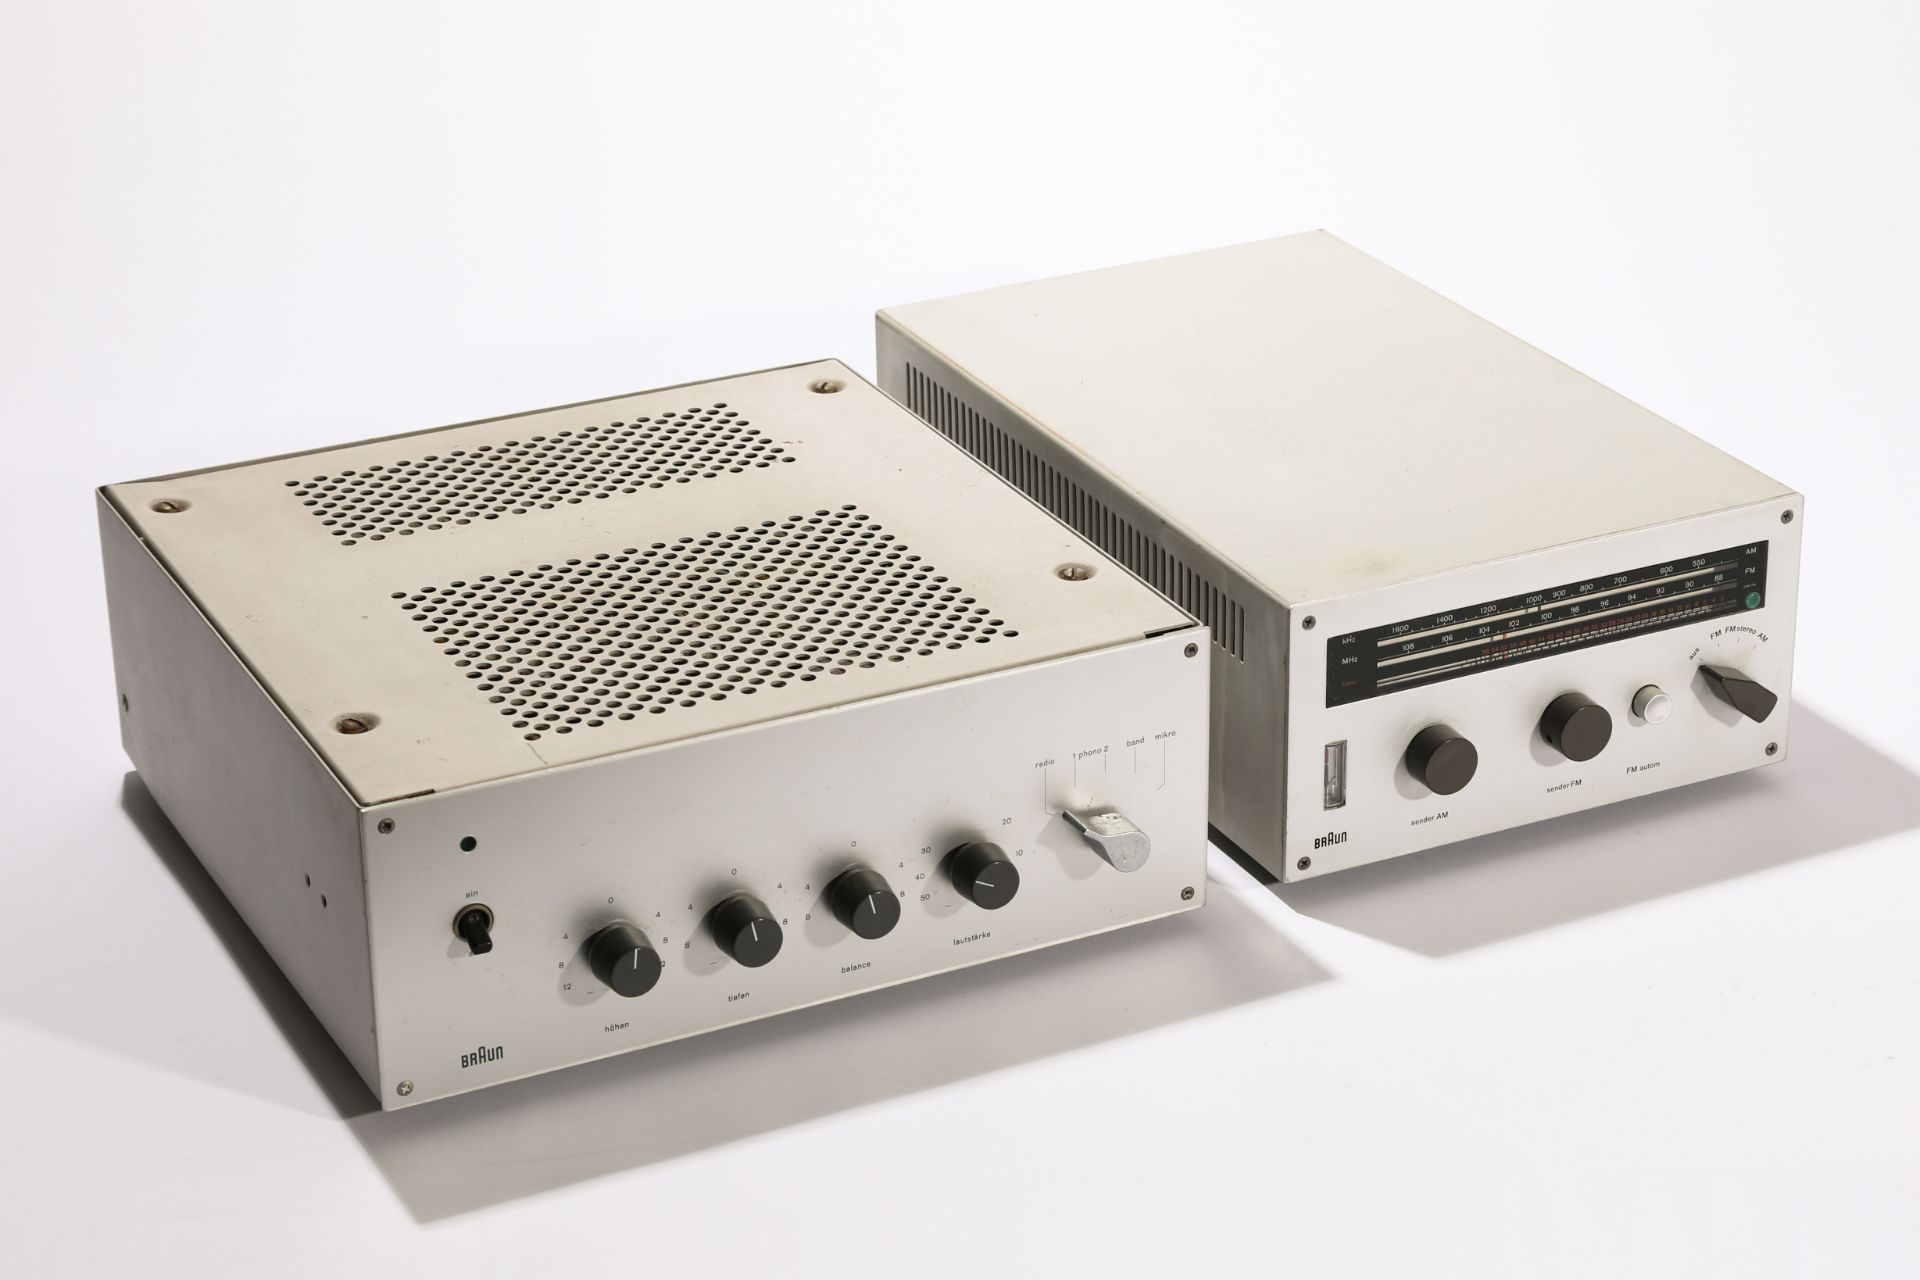 Dieter Rams, Braun, Receiver CE 16 + Amplifier CSV 10